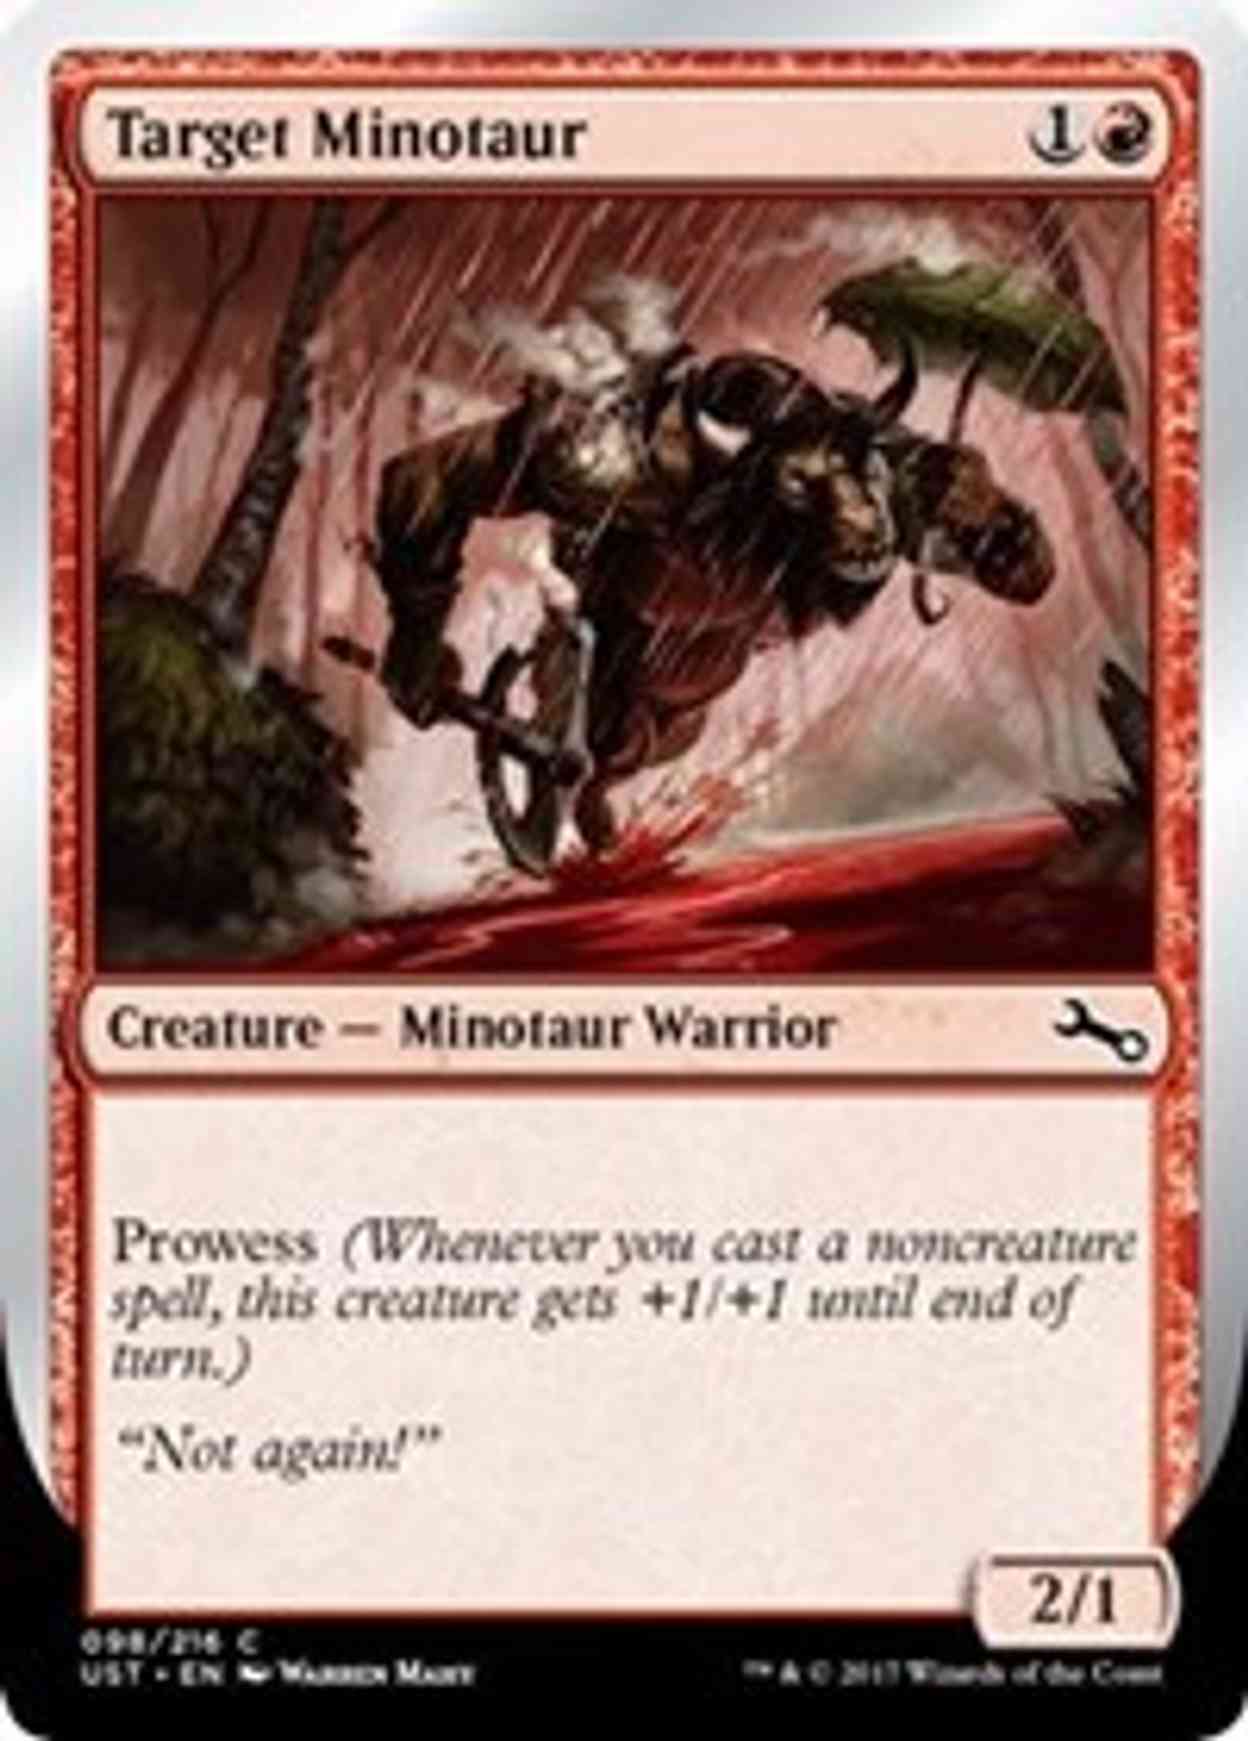 Target Minotaur (B) magic card front